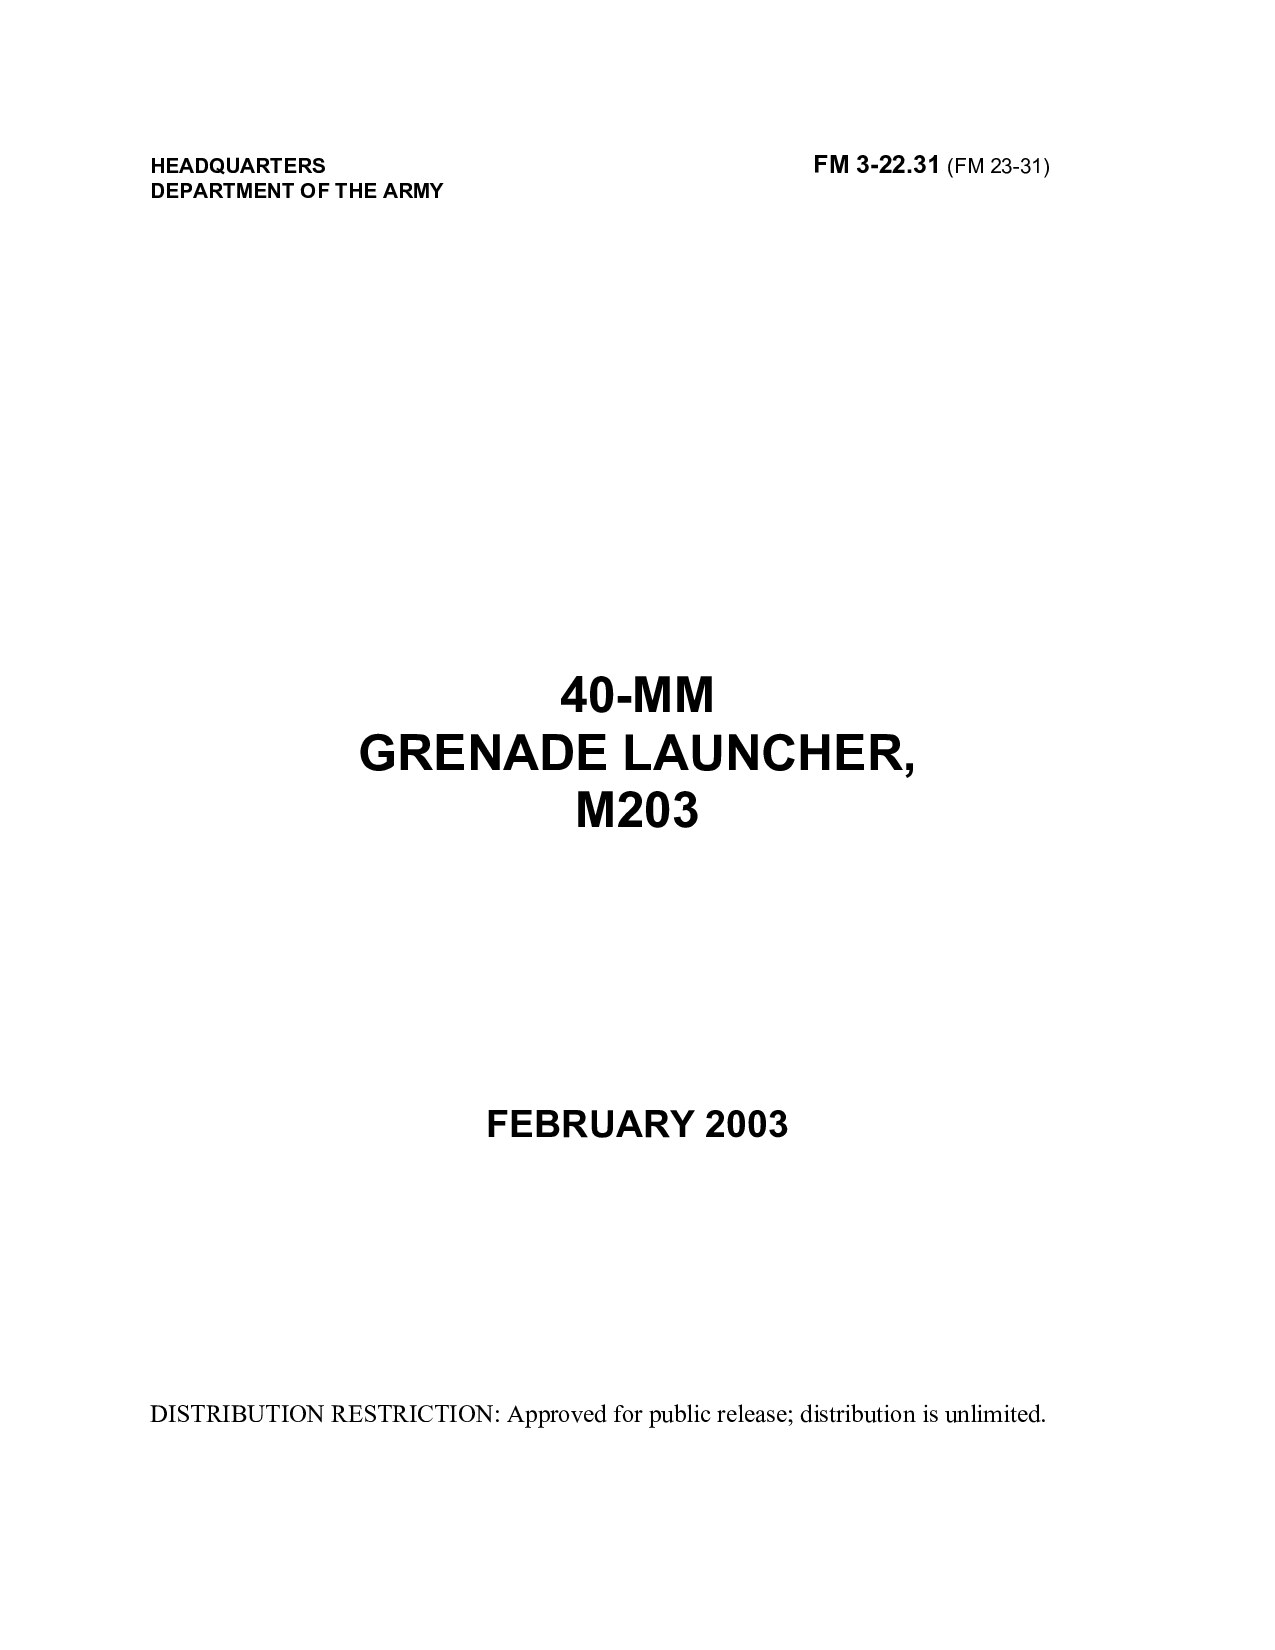 FM 3-22.31 40mm Grenade Launcher M203 February 2003 - version 2.pdf